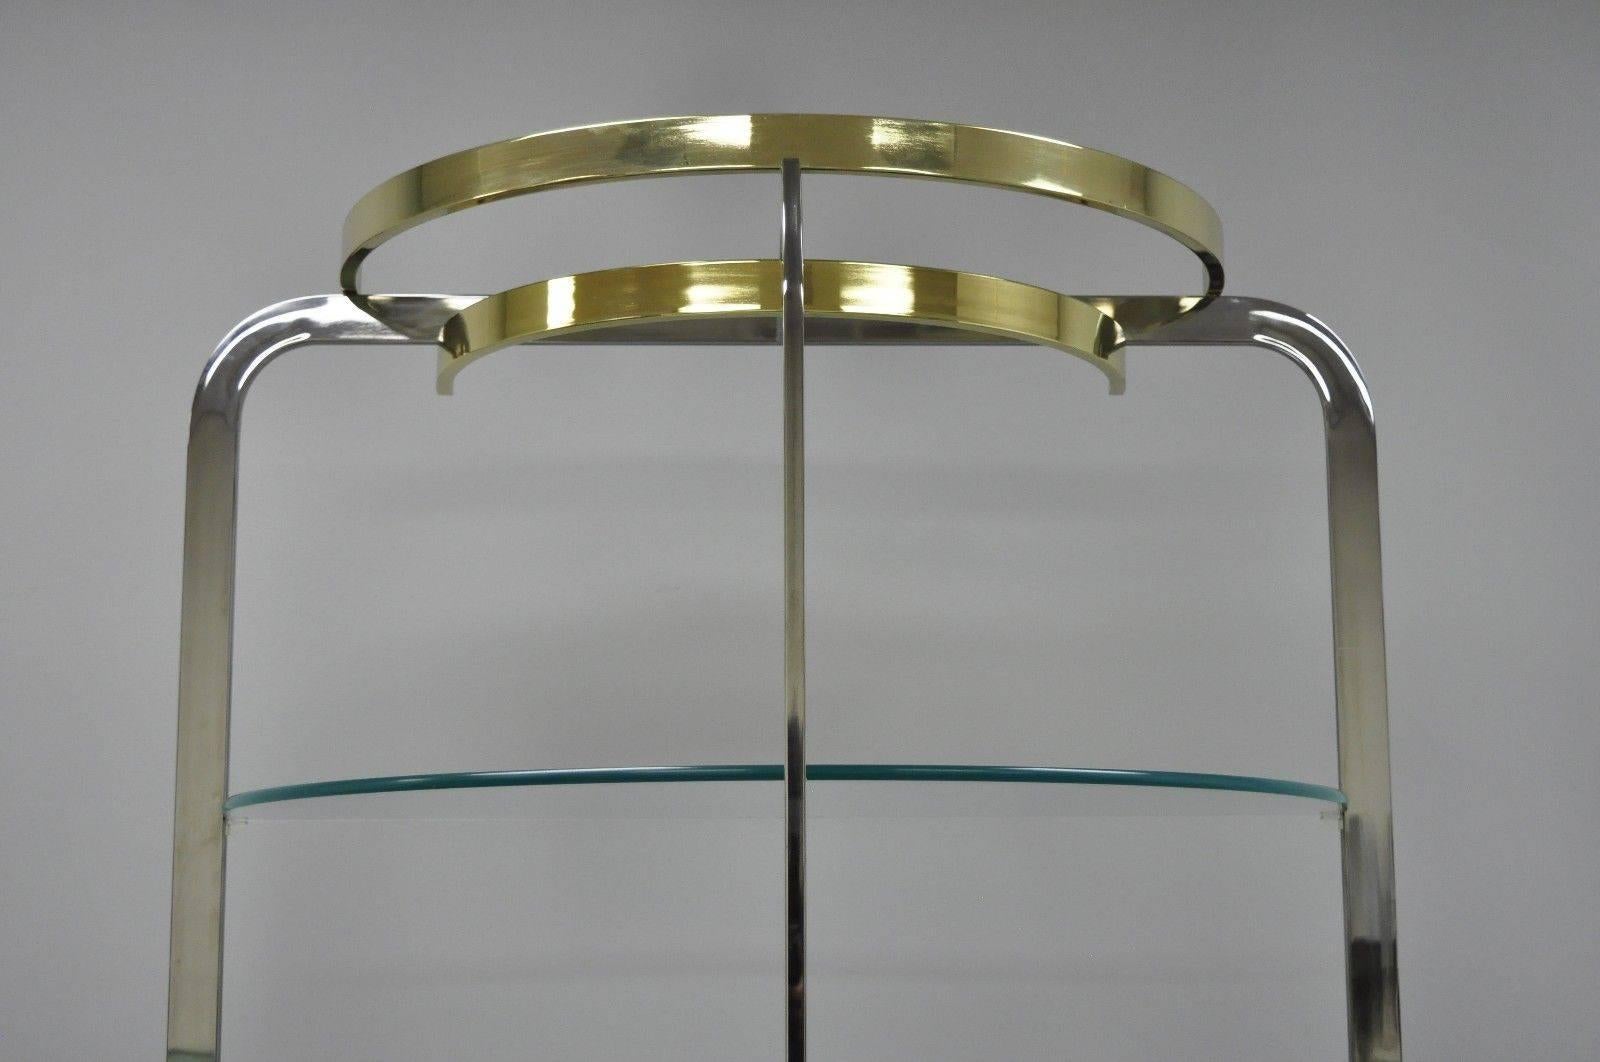 American Chrome Brass Glass Demilune Etagere Half Round Mid-Century Modern Shelf